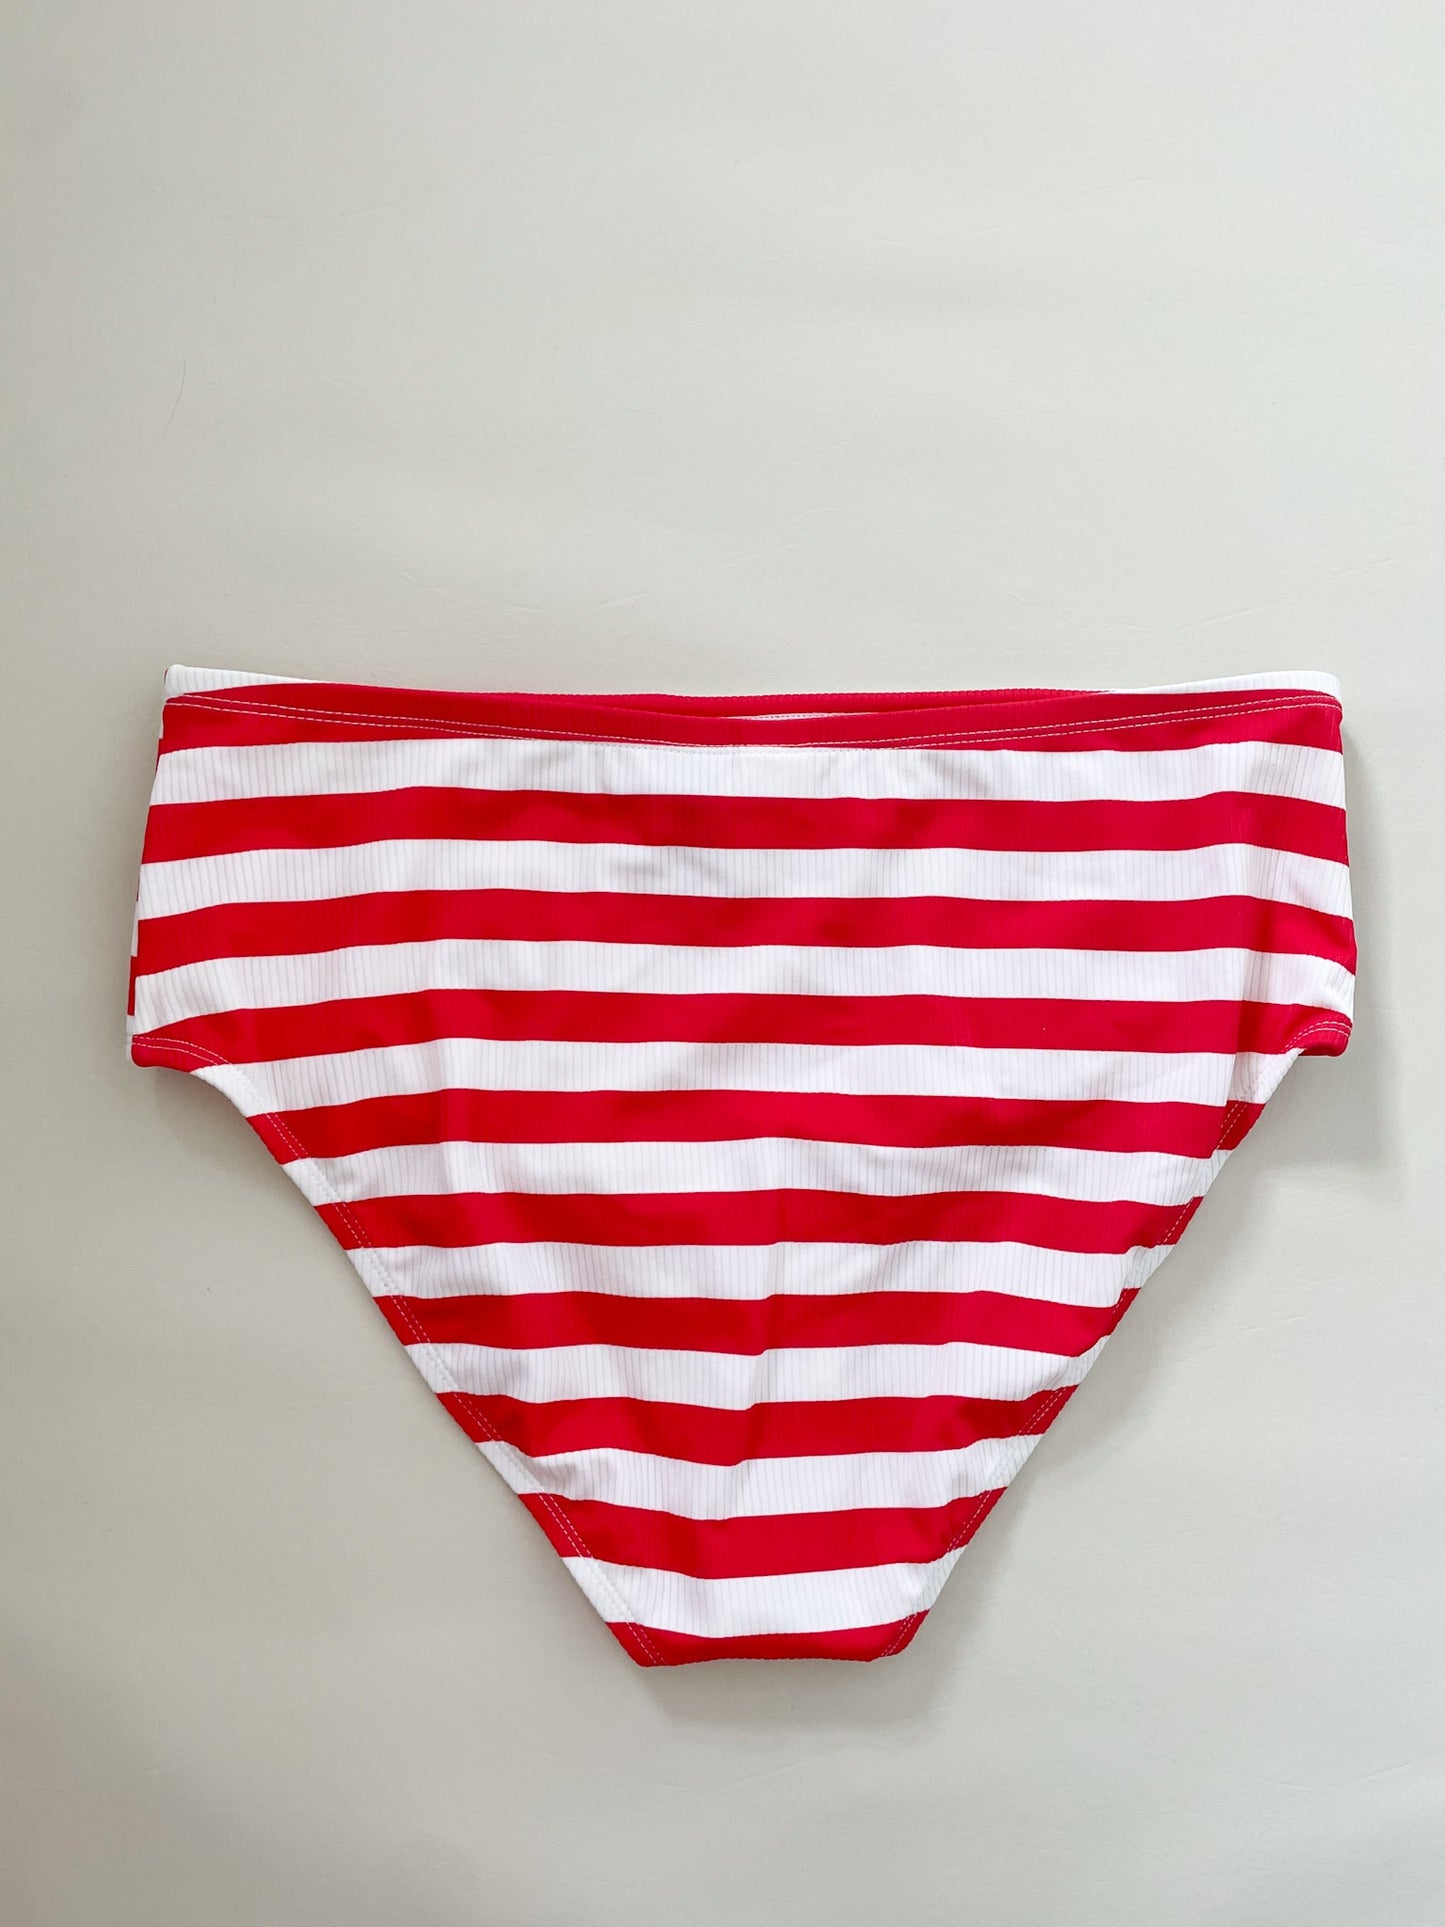 California Sunshine Red and White Striped Bikini Bottoms NWT - 1X